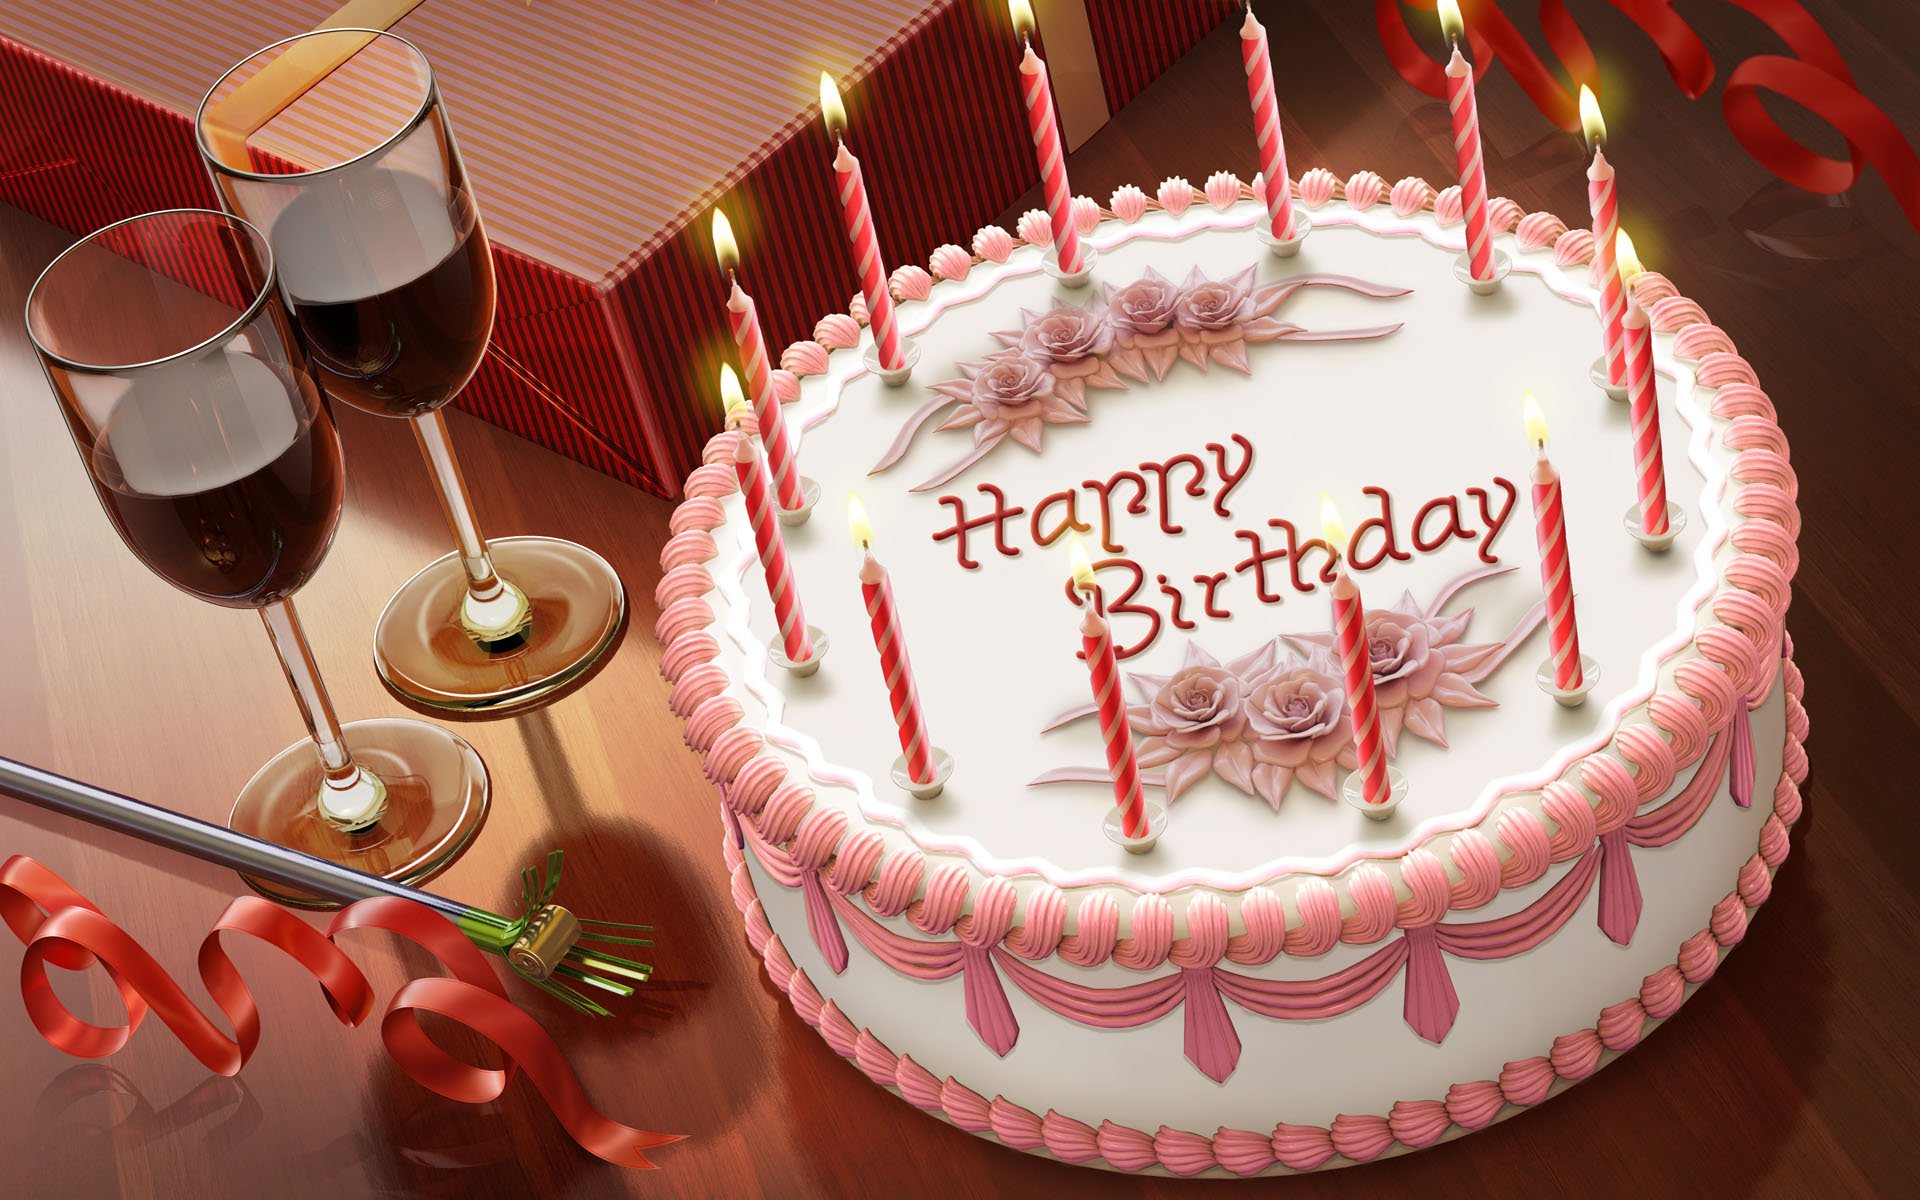 Happy Birthday! надпись на торте.